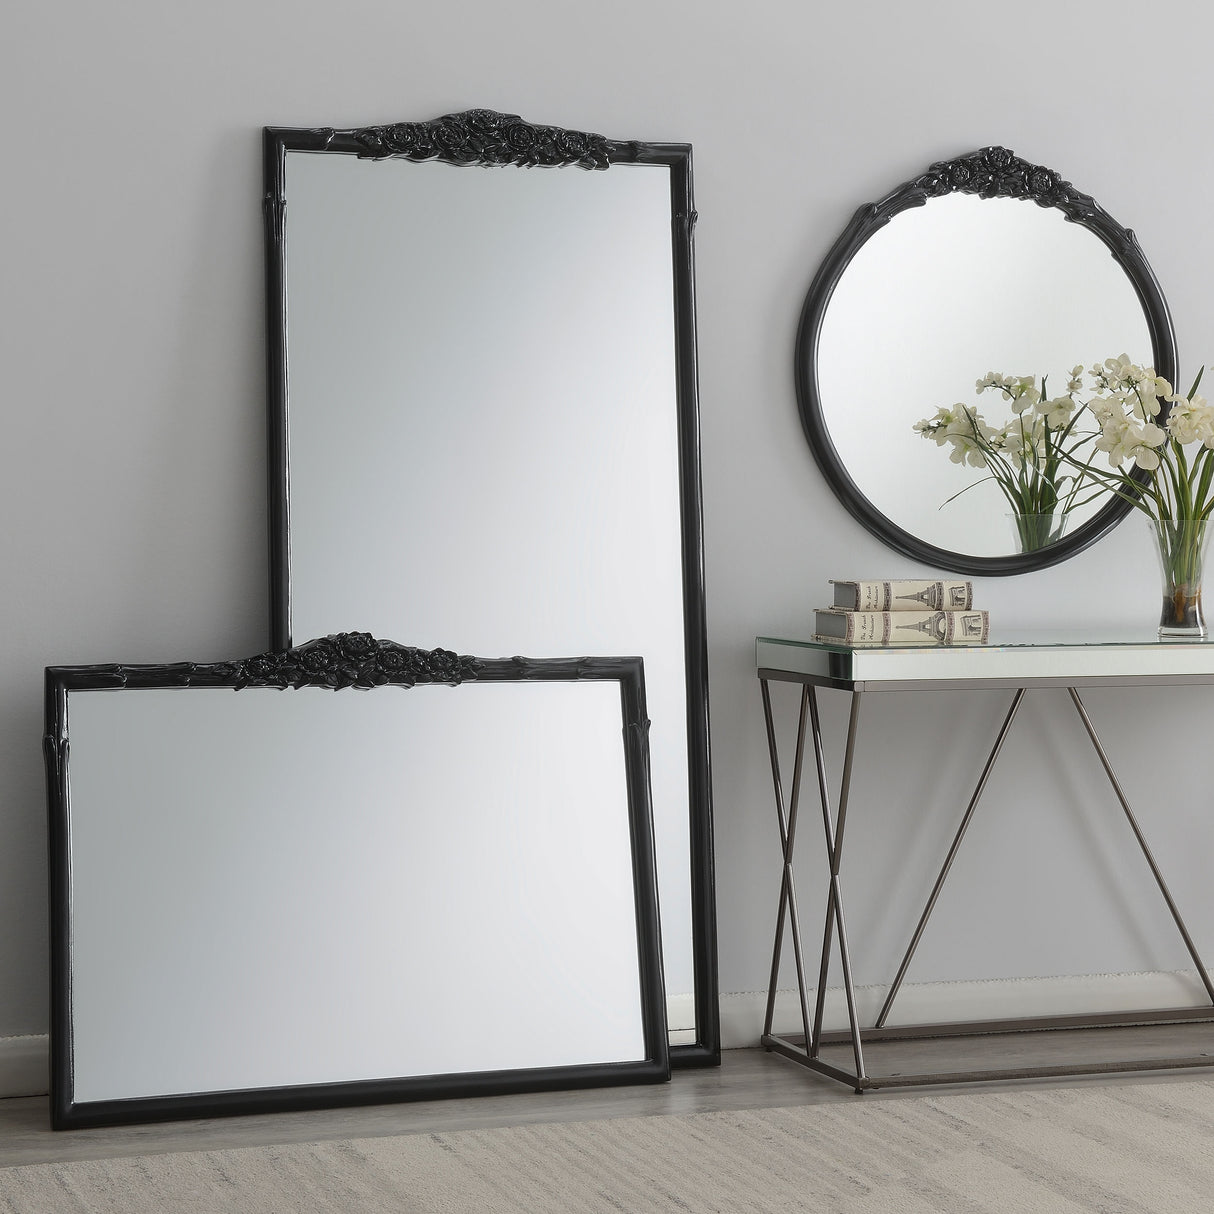 Floor Mirror - Sylvie French Provincial Rectangular Floor Mirror Black